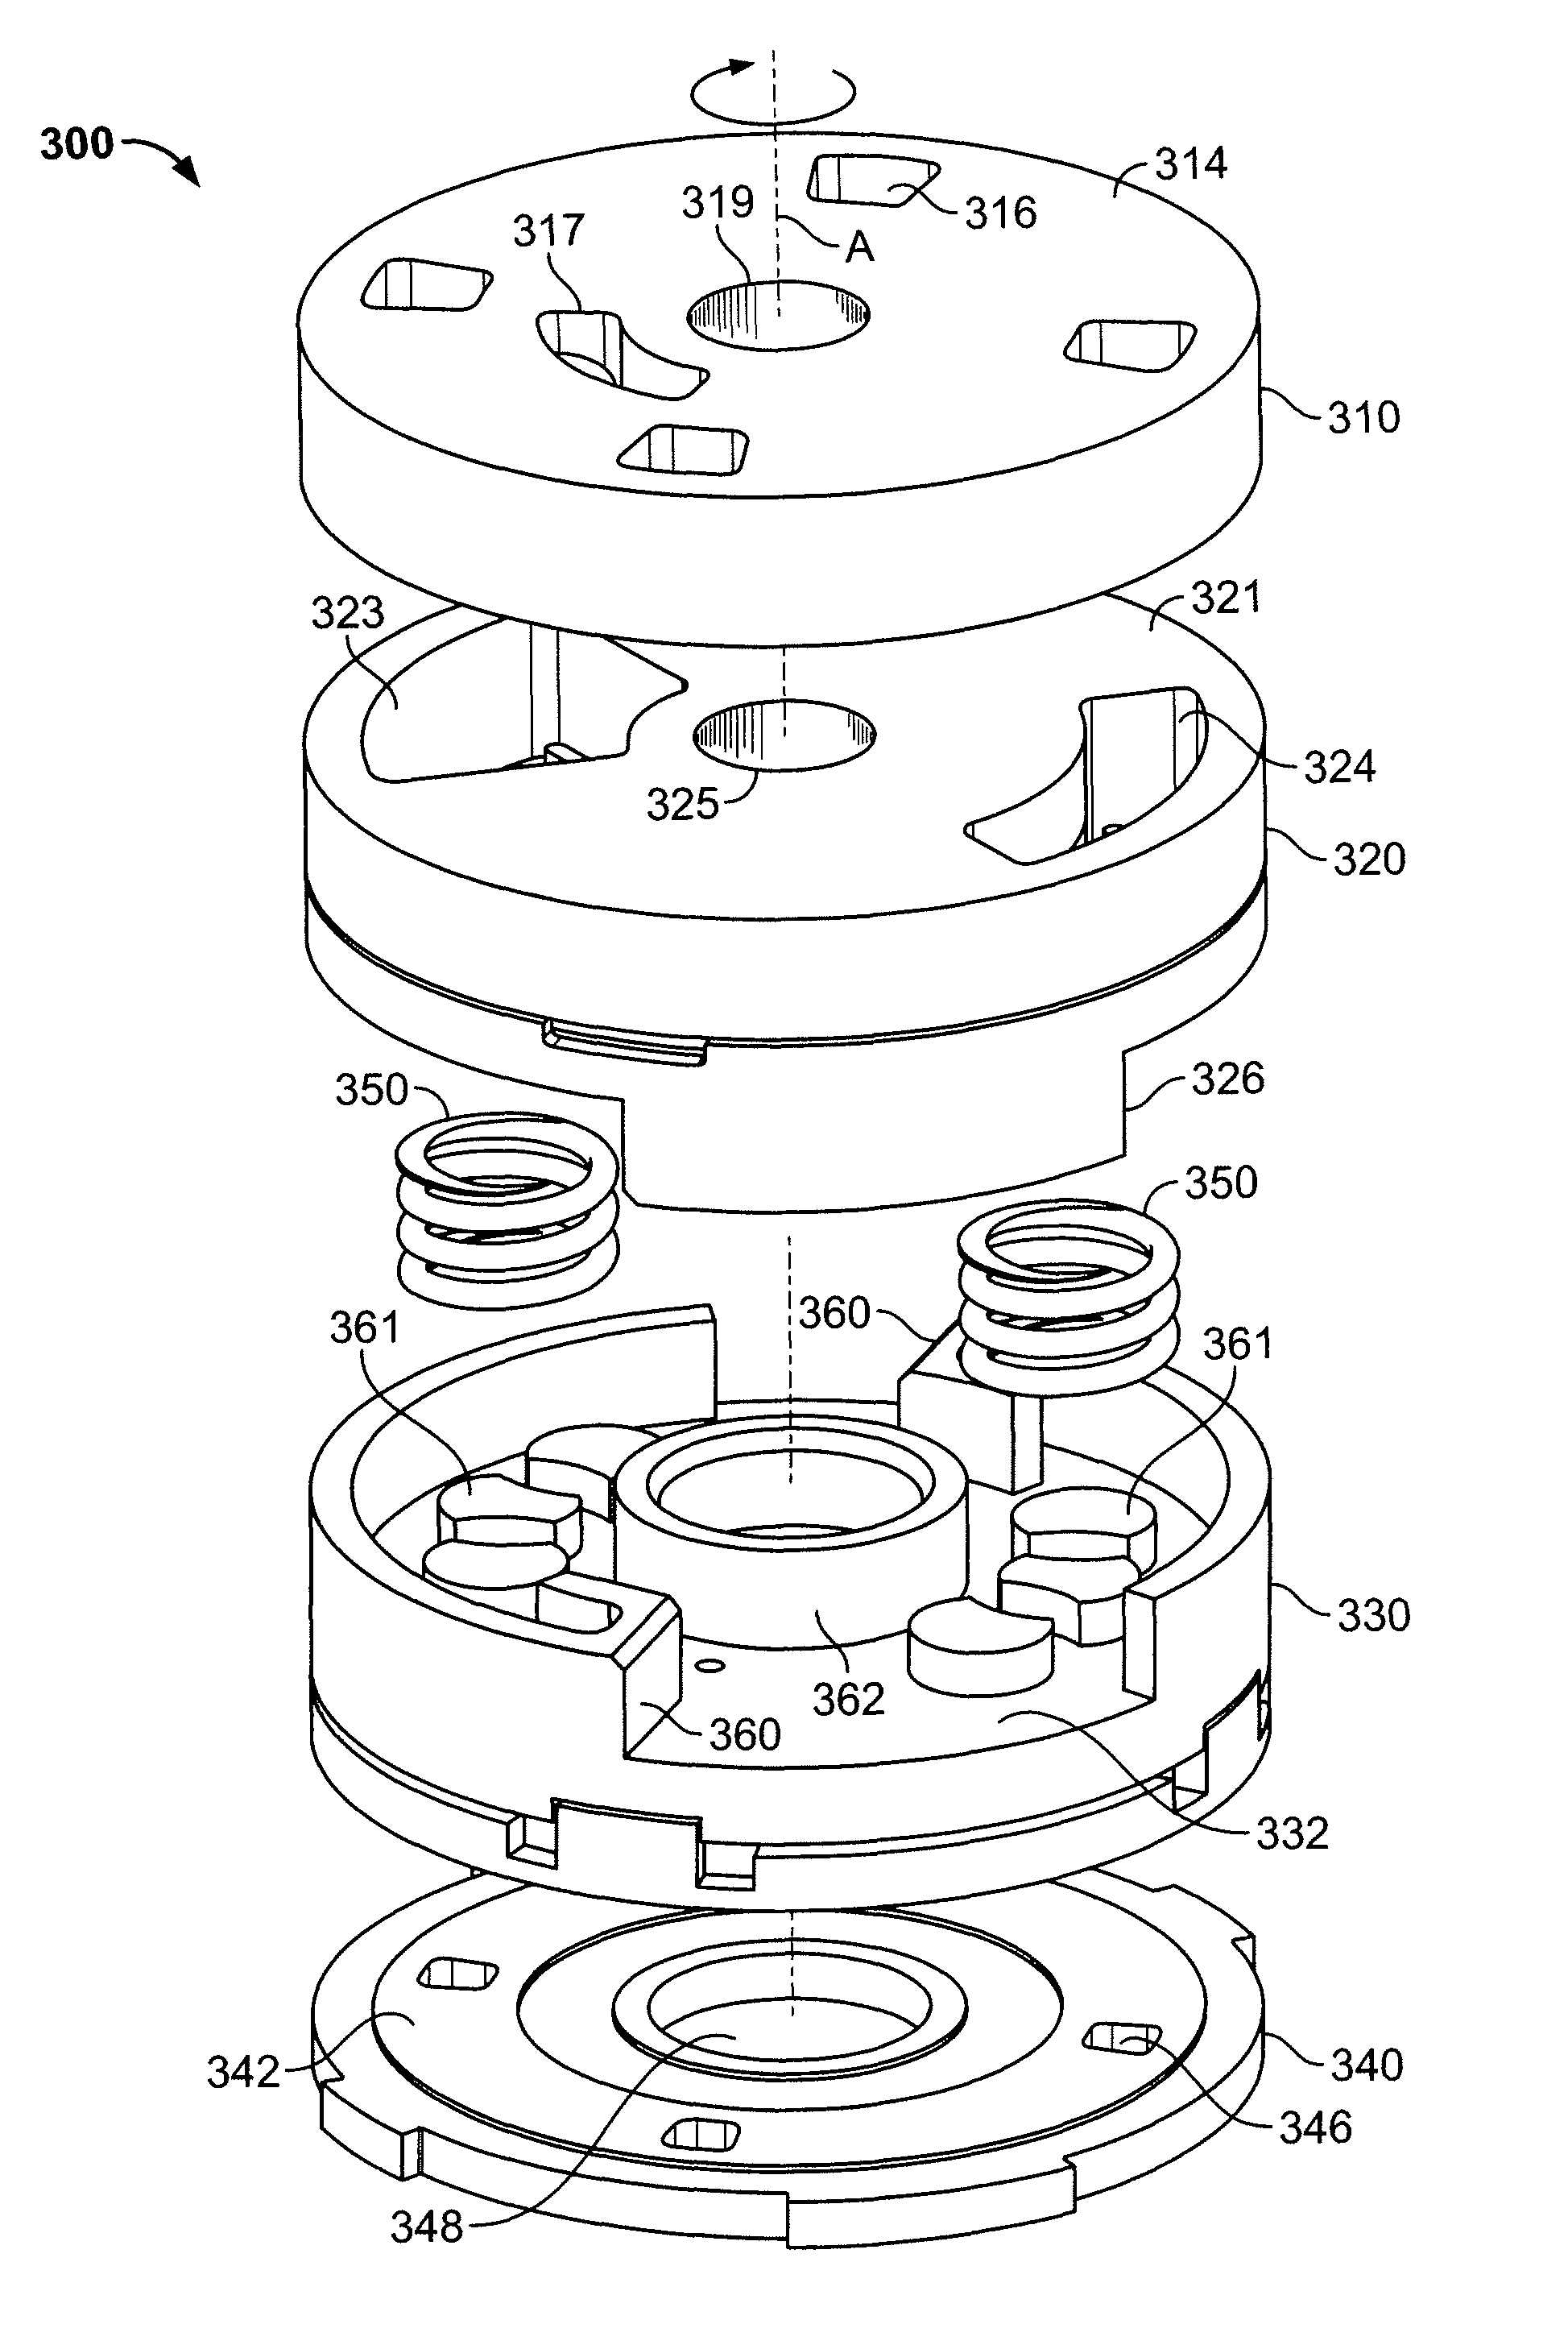 Rotary valve